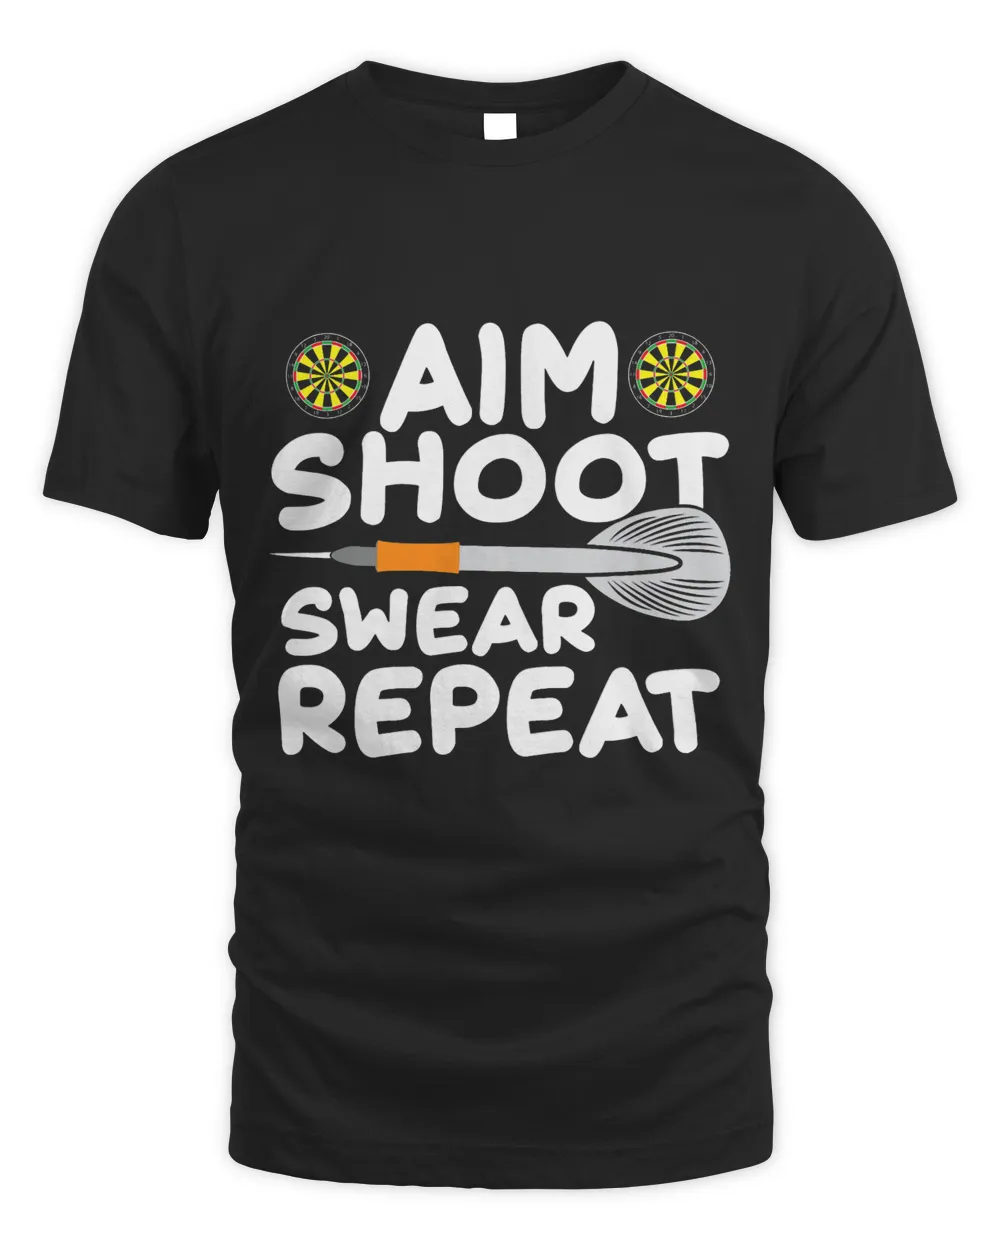 Aim Shoot Swear Repeat Funny Darts Player